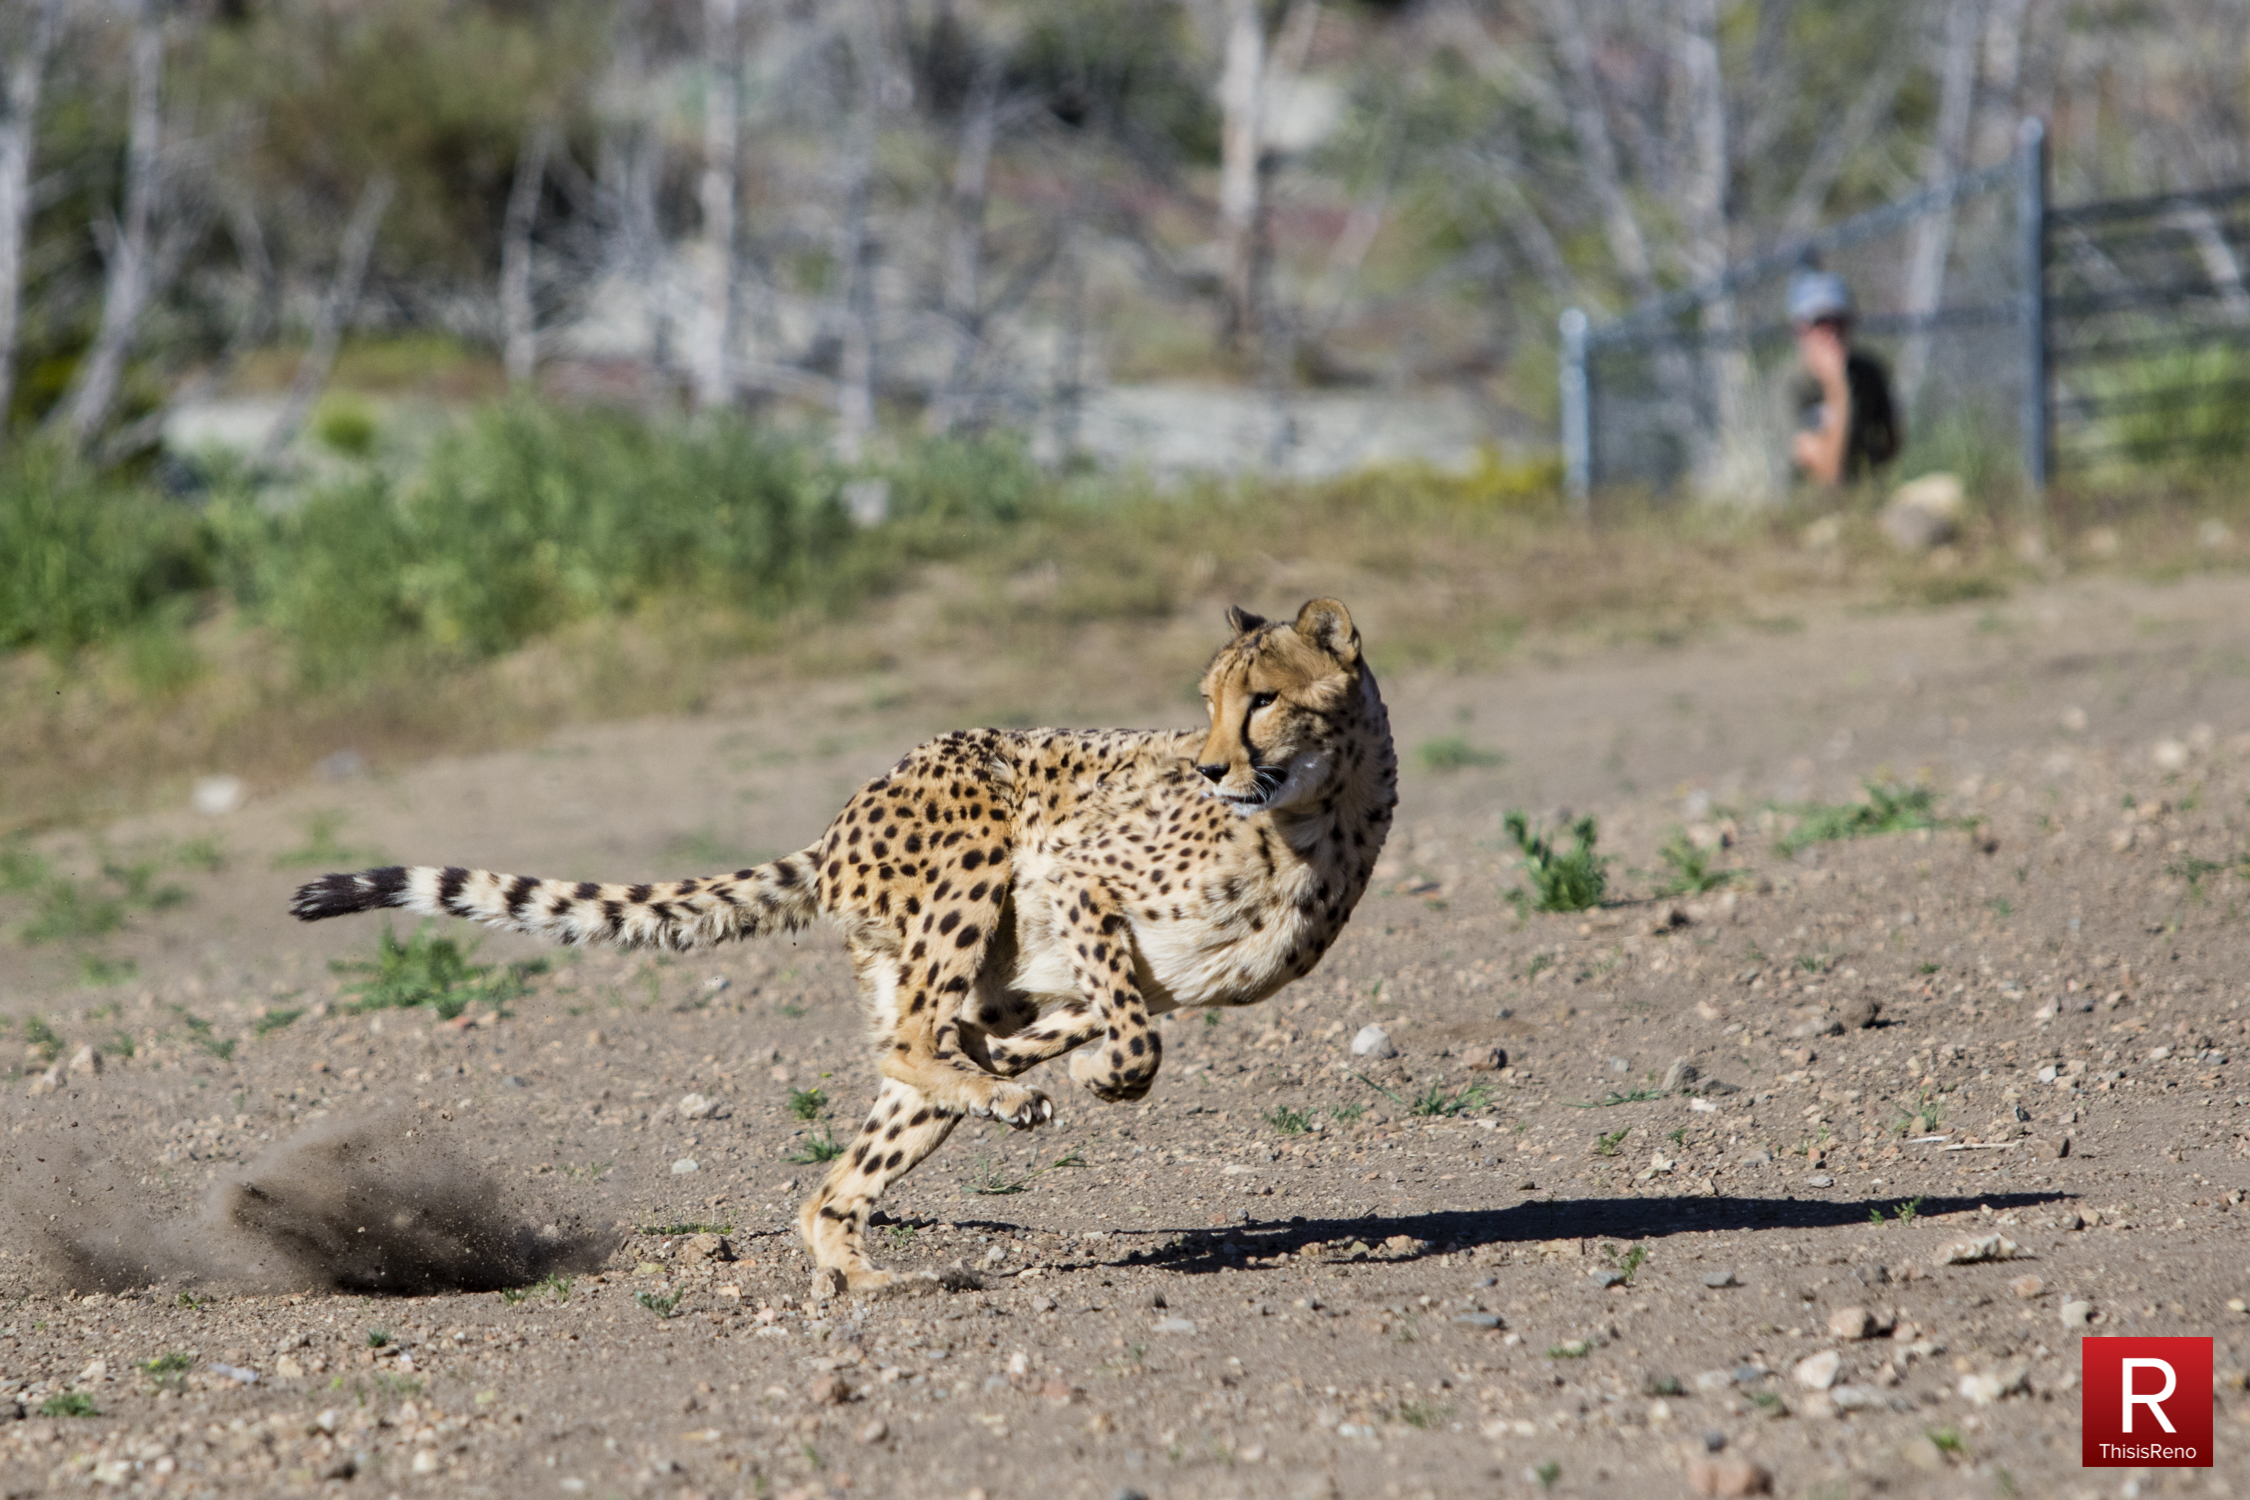 PHOTOS: Full Speed Cheetahs at Animal Ark Sanctuary